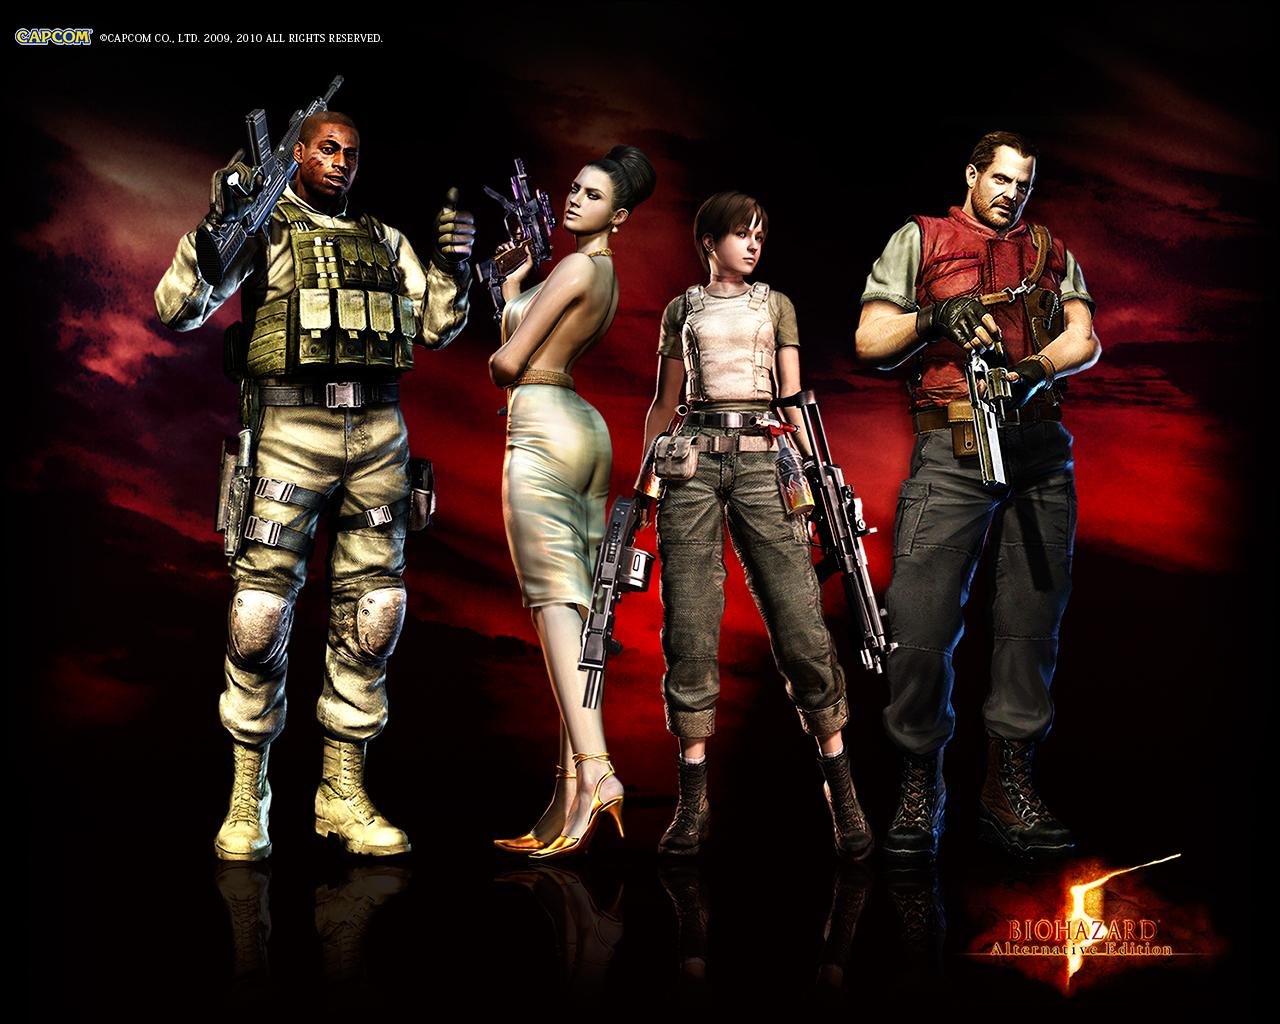 Wallpapers Resident Evil Resident Evil 5 Games Image #183679 Download